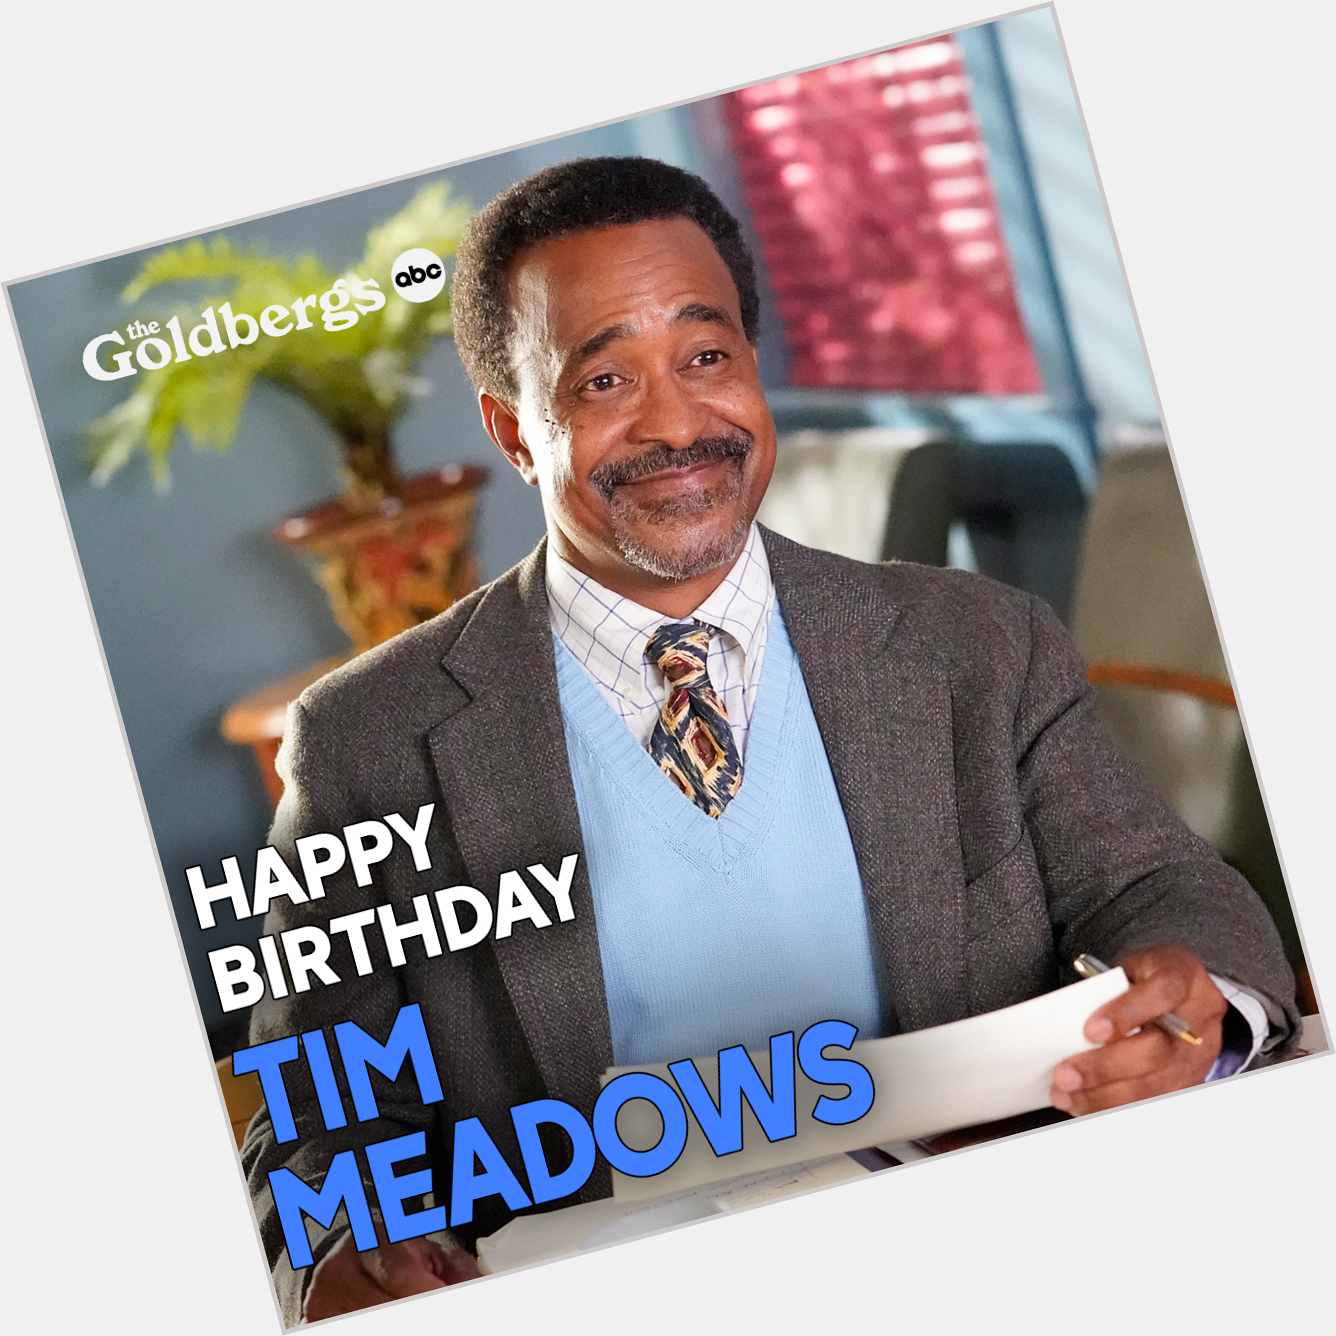 Happy Birthday Tim Meadows! 